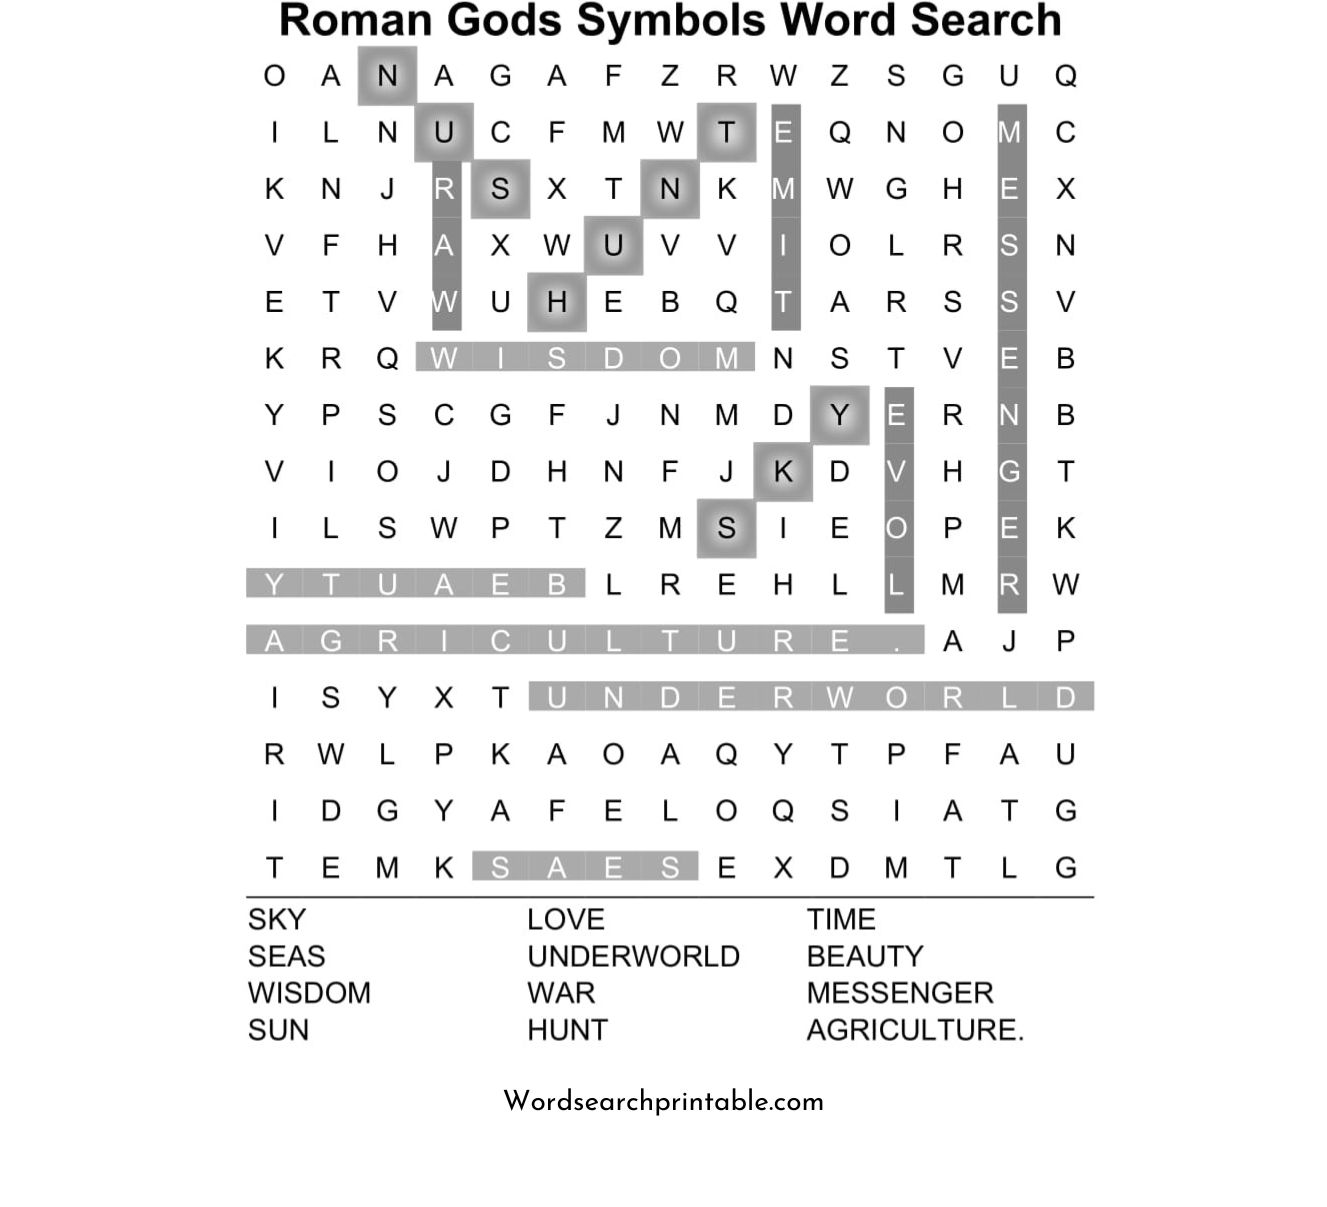 roman gods symbols word search puzzle solution